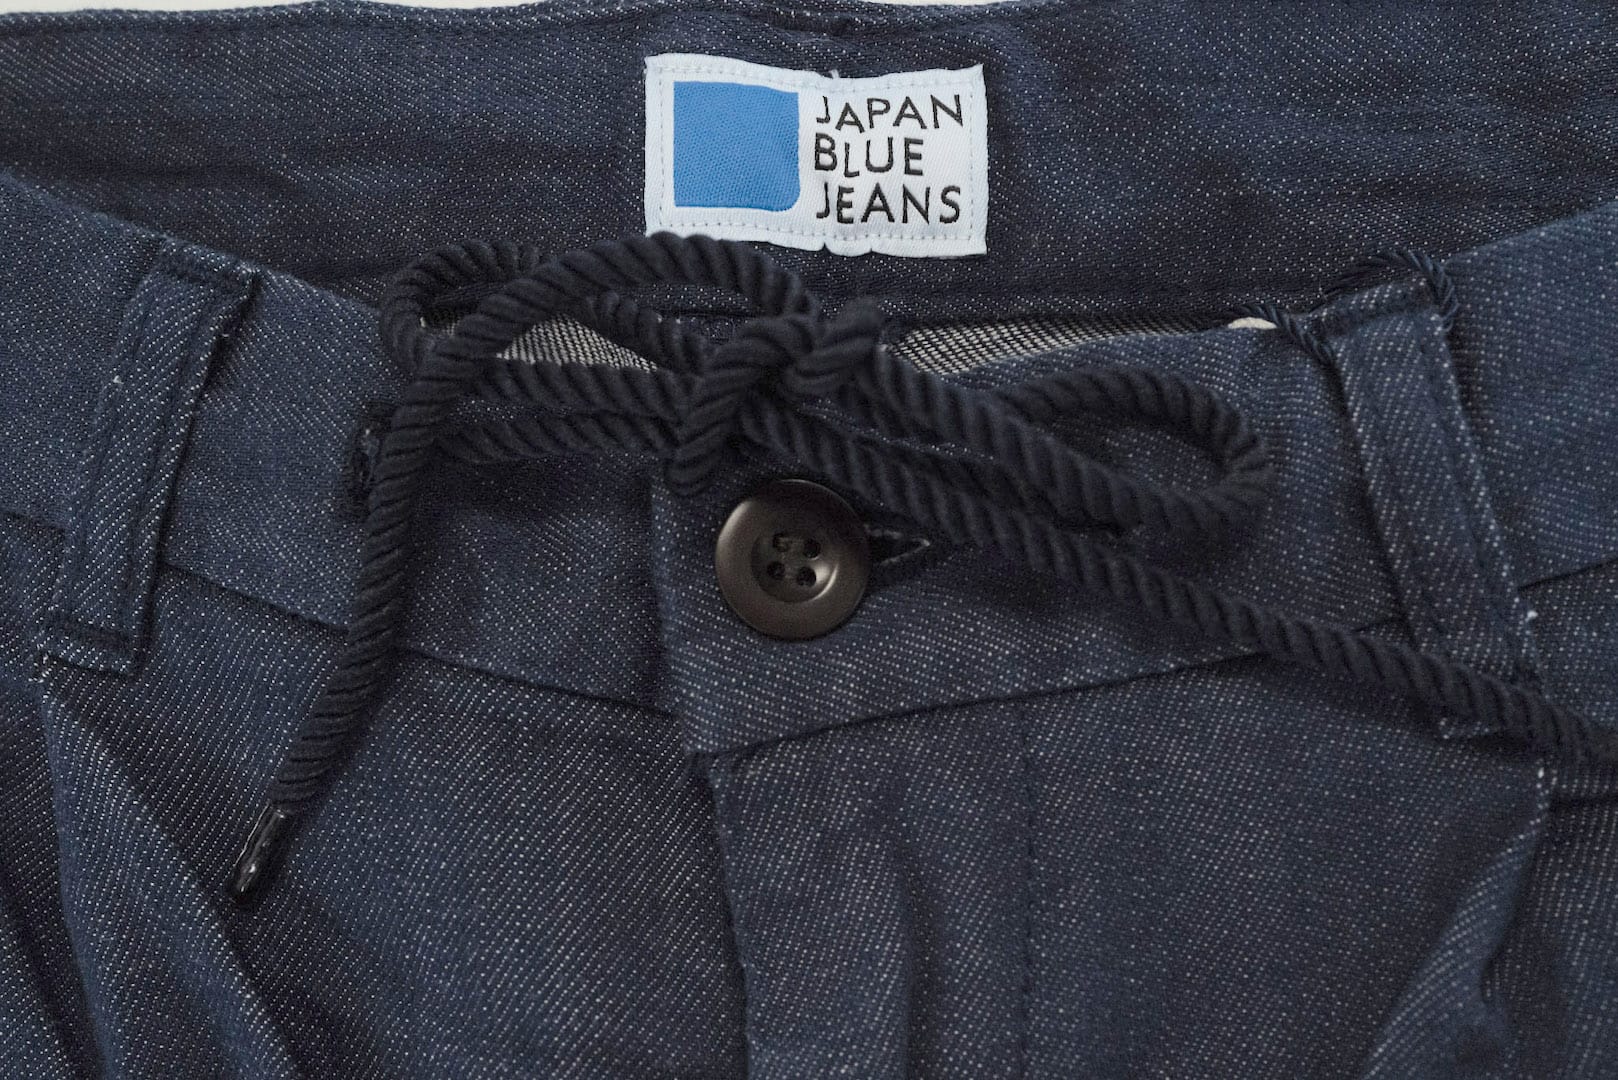 Japan Blue 10oz "Shin" Denim Easy Pants (Genuine Indigo)